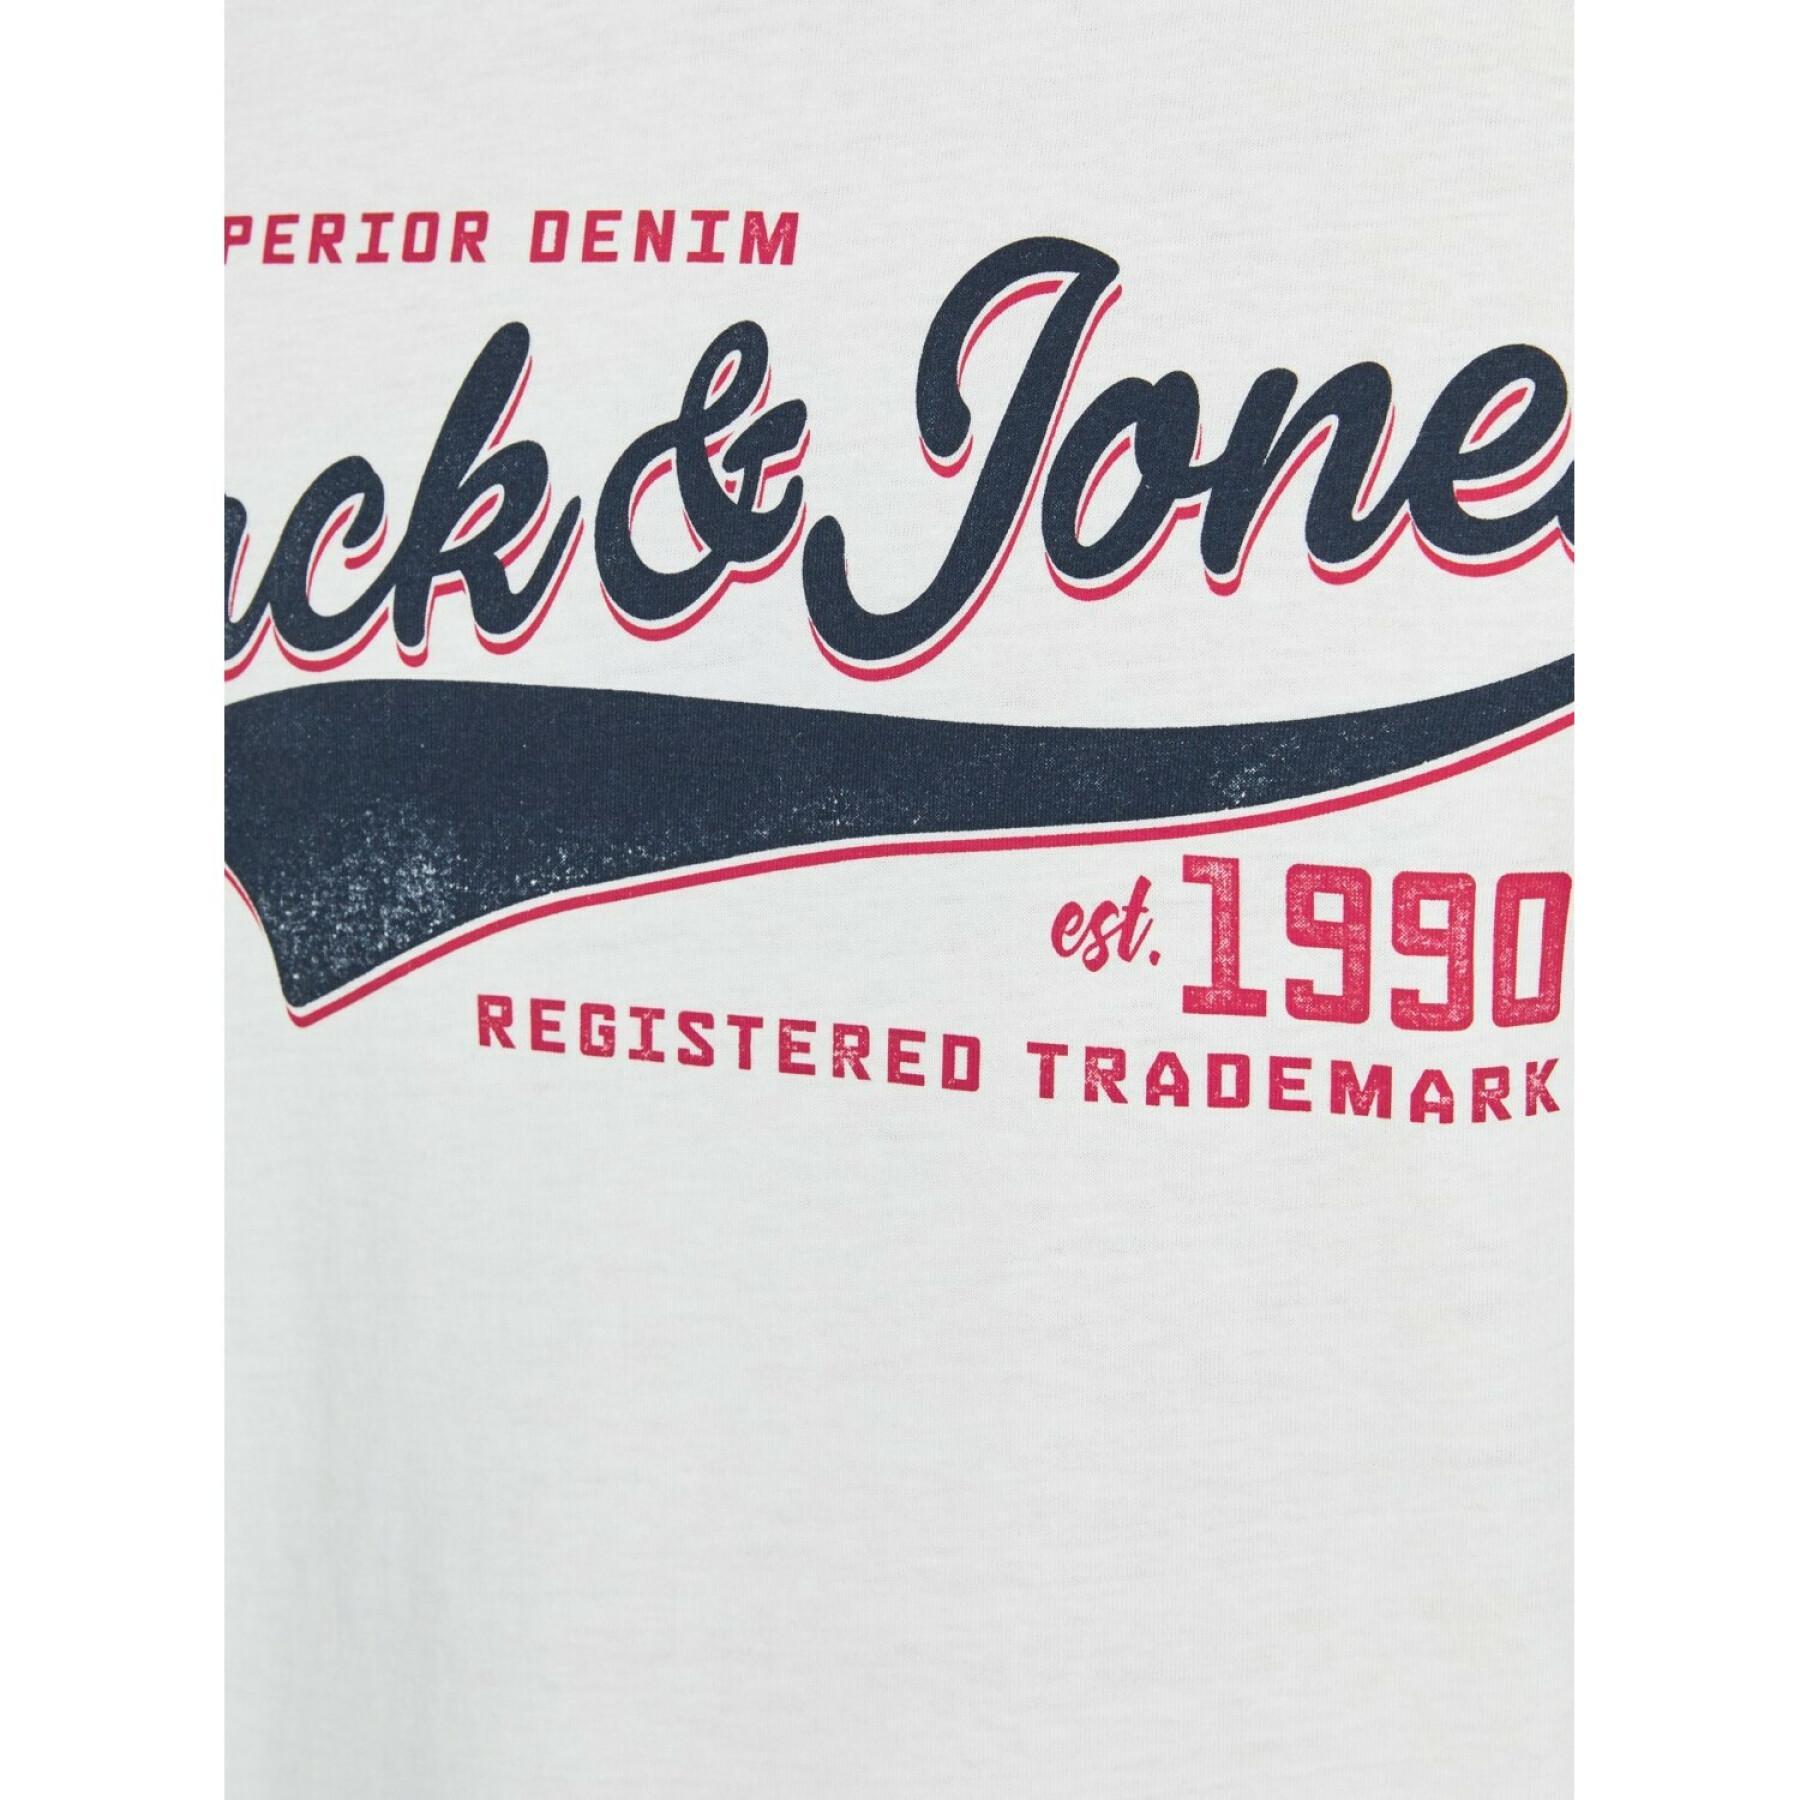 Maglietta Jack & Jones Logo